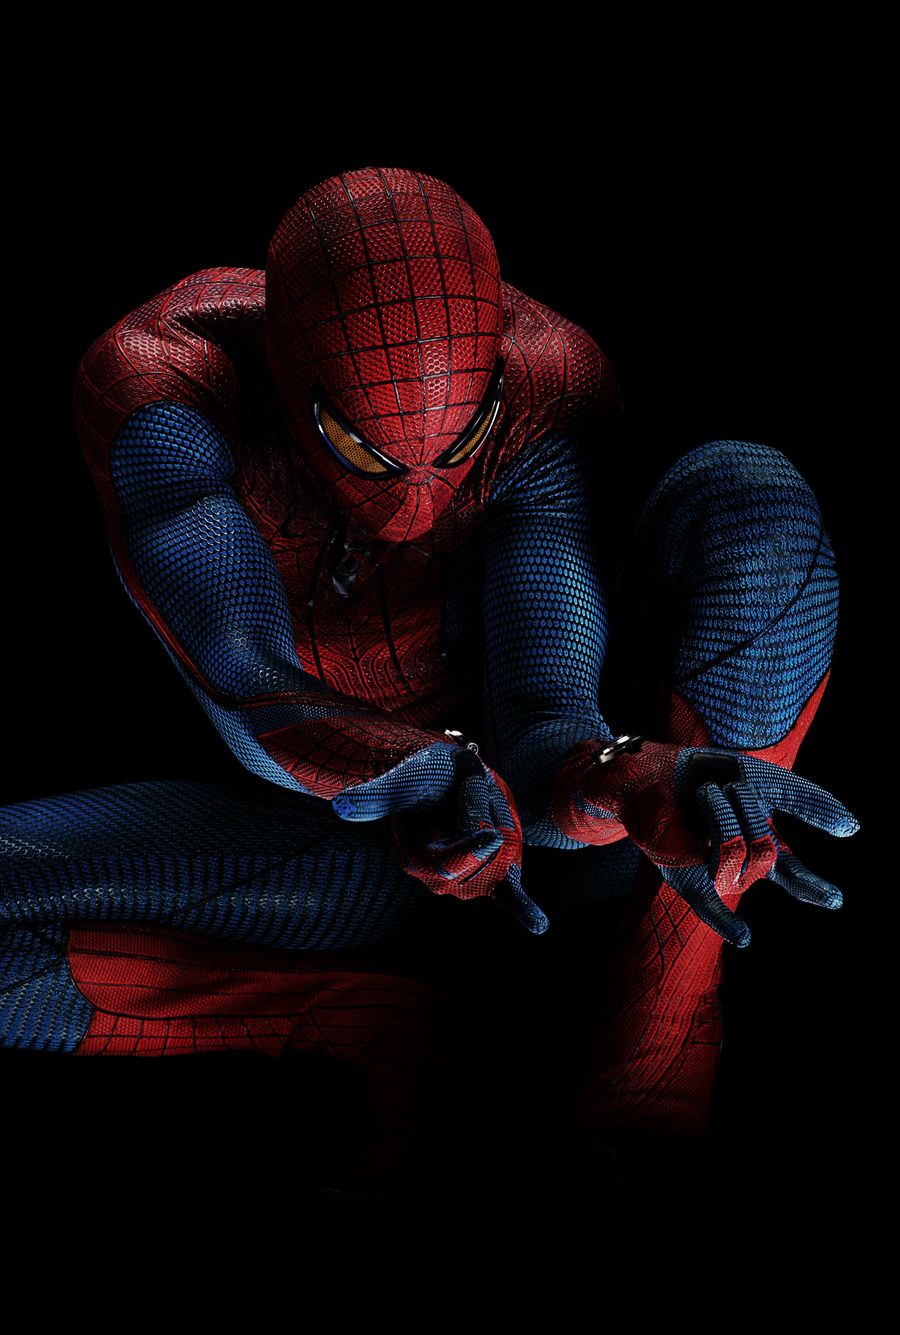 Spiderman Logo 2012